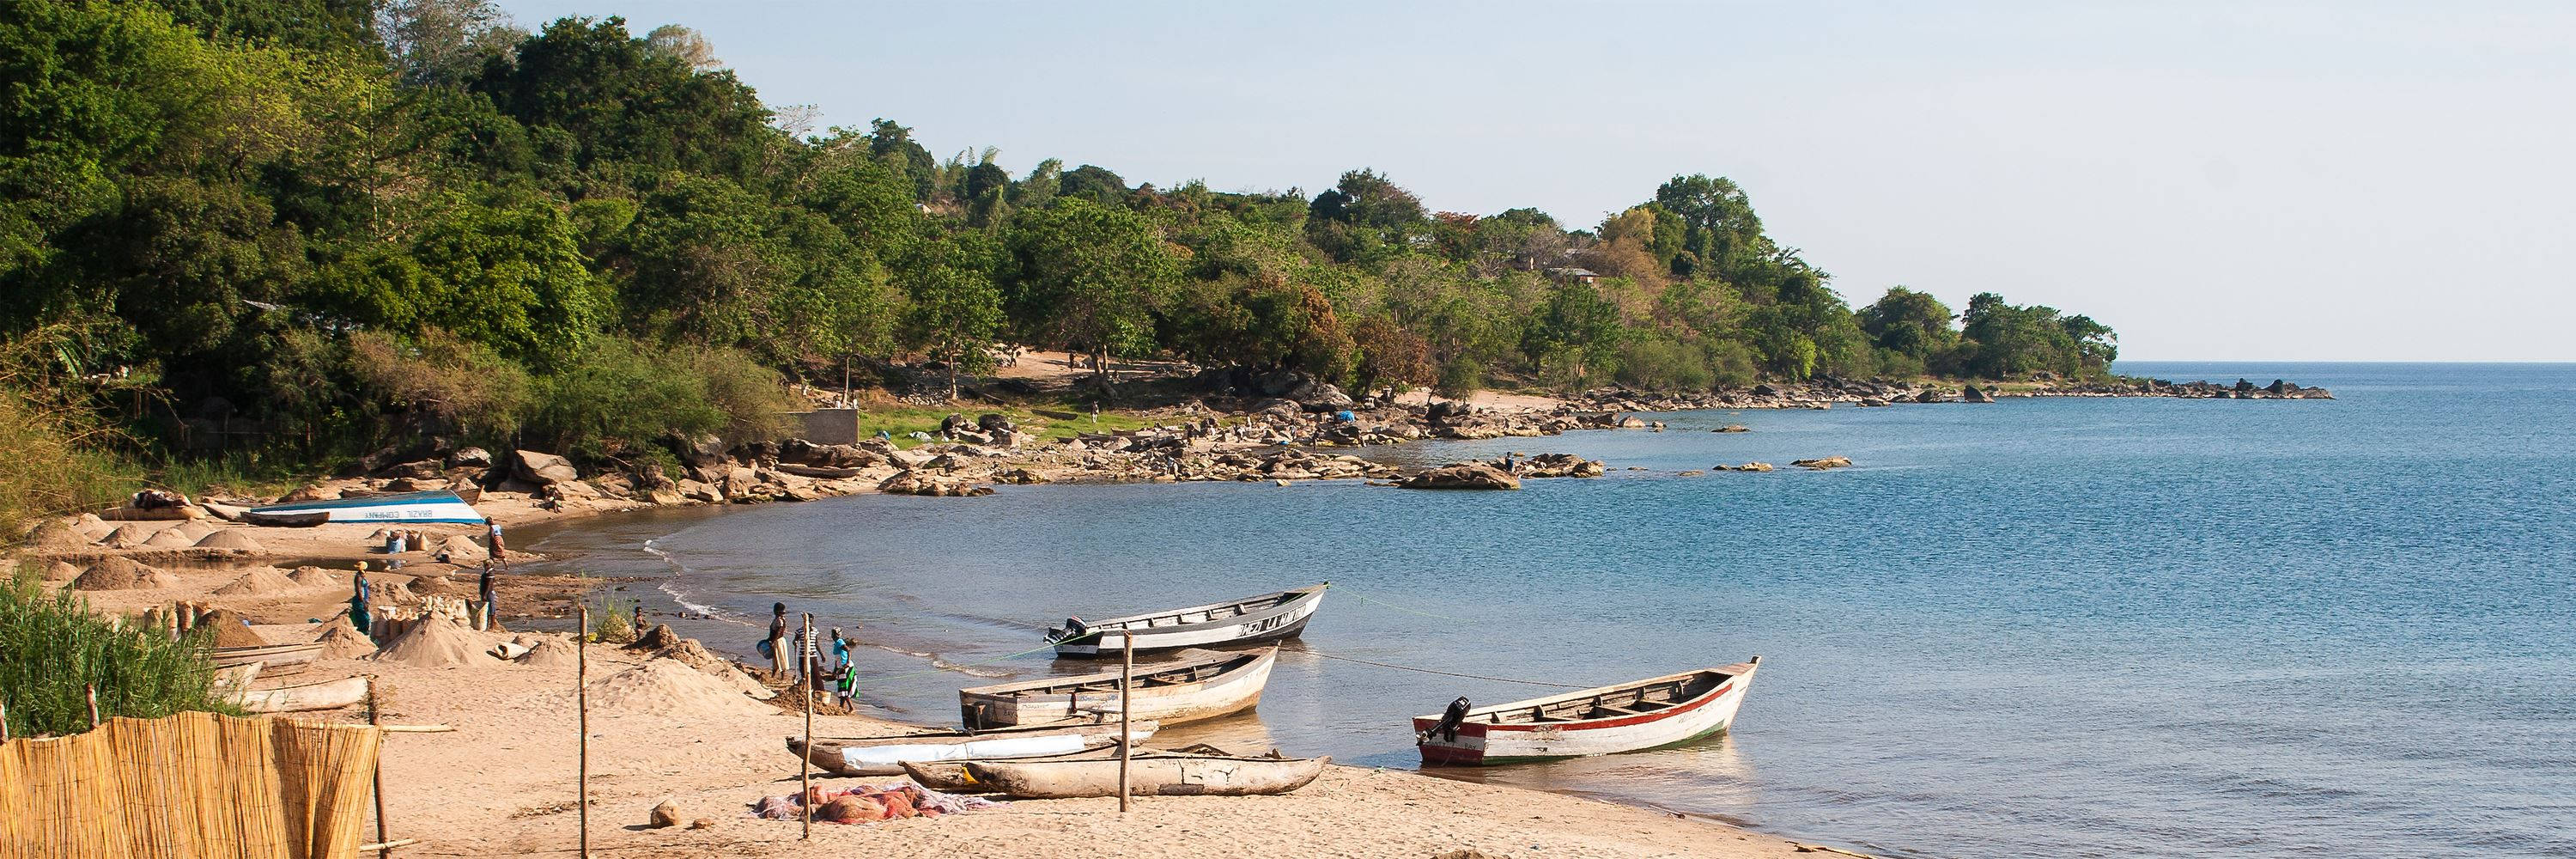 Malawi Parked Boats Beach Wallpaper